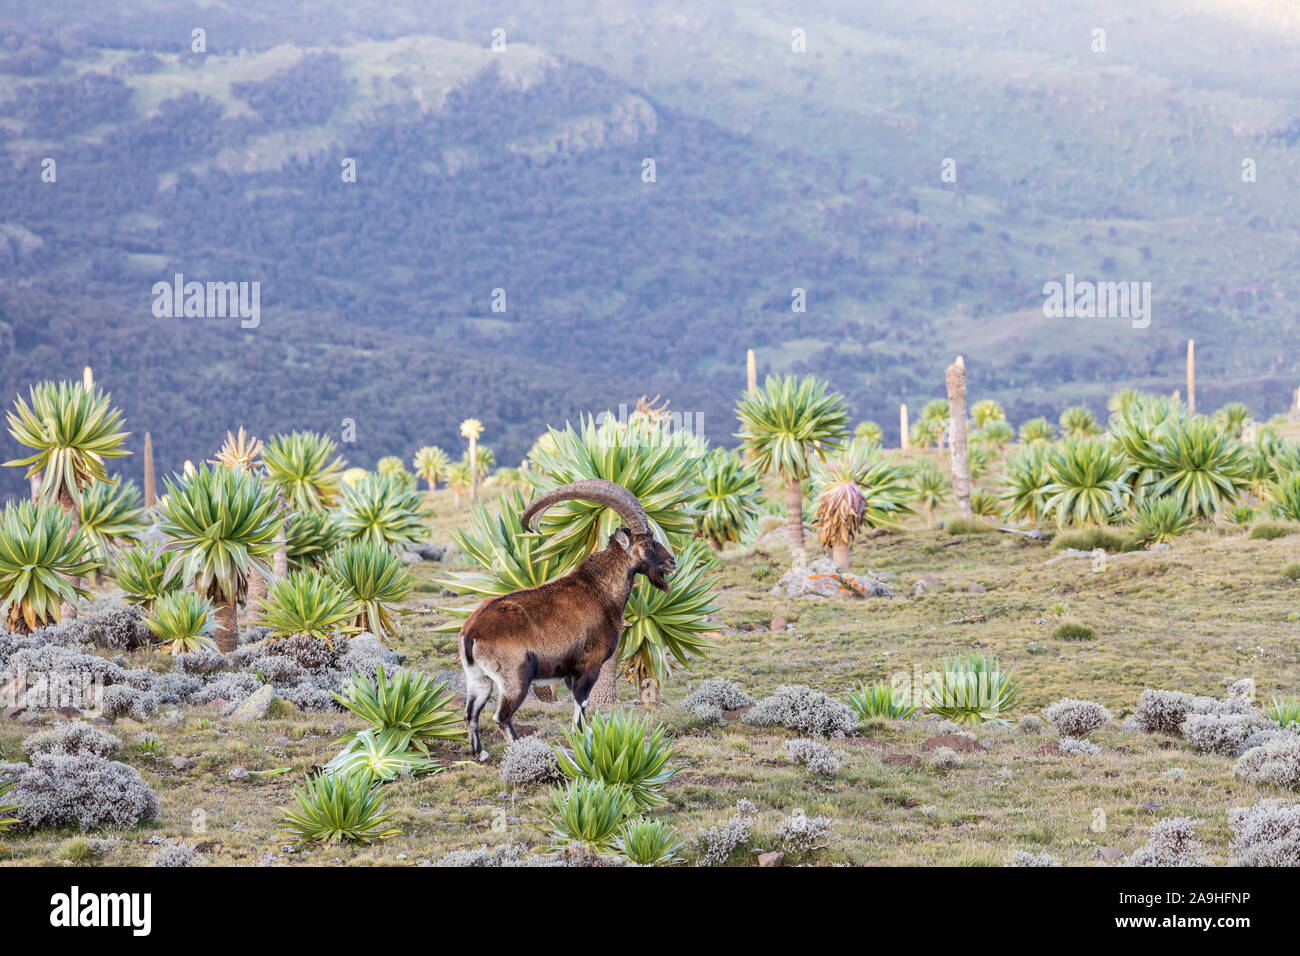 Ethiopia. Amhara. North Gondar. Walia Ibex among giant lobelia in the Ethiopian highlands. Stock Photo